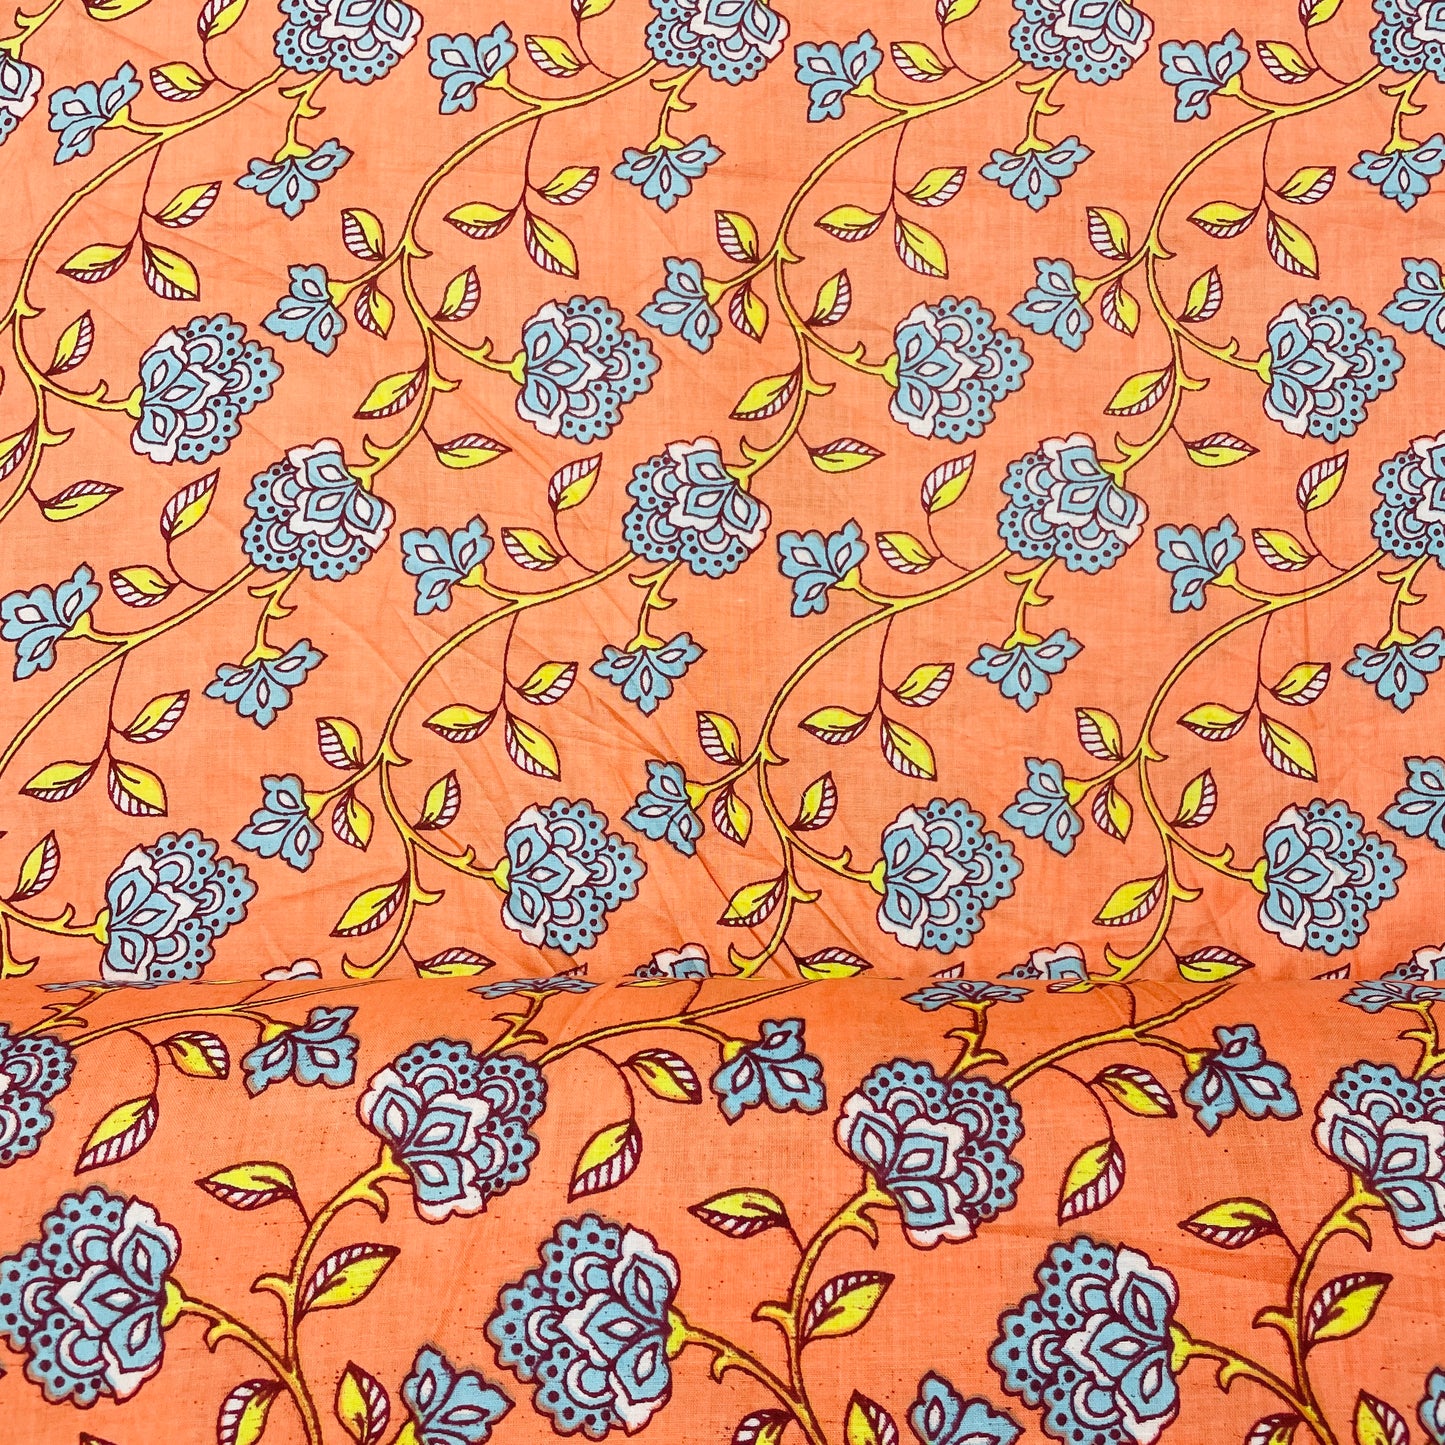 Salmon Pink & Blue Floral Print Cotton Fabric - TradeUNO